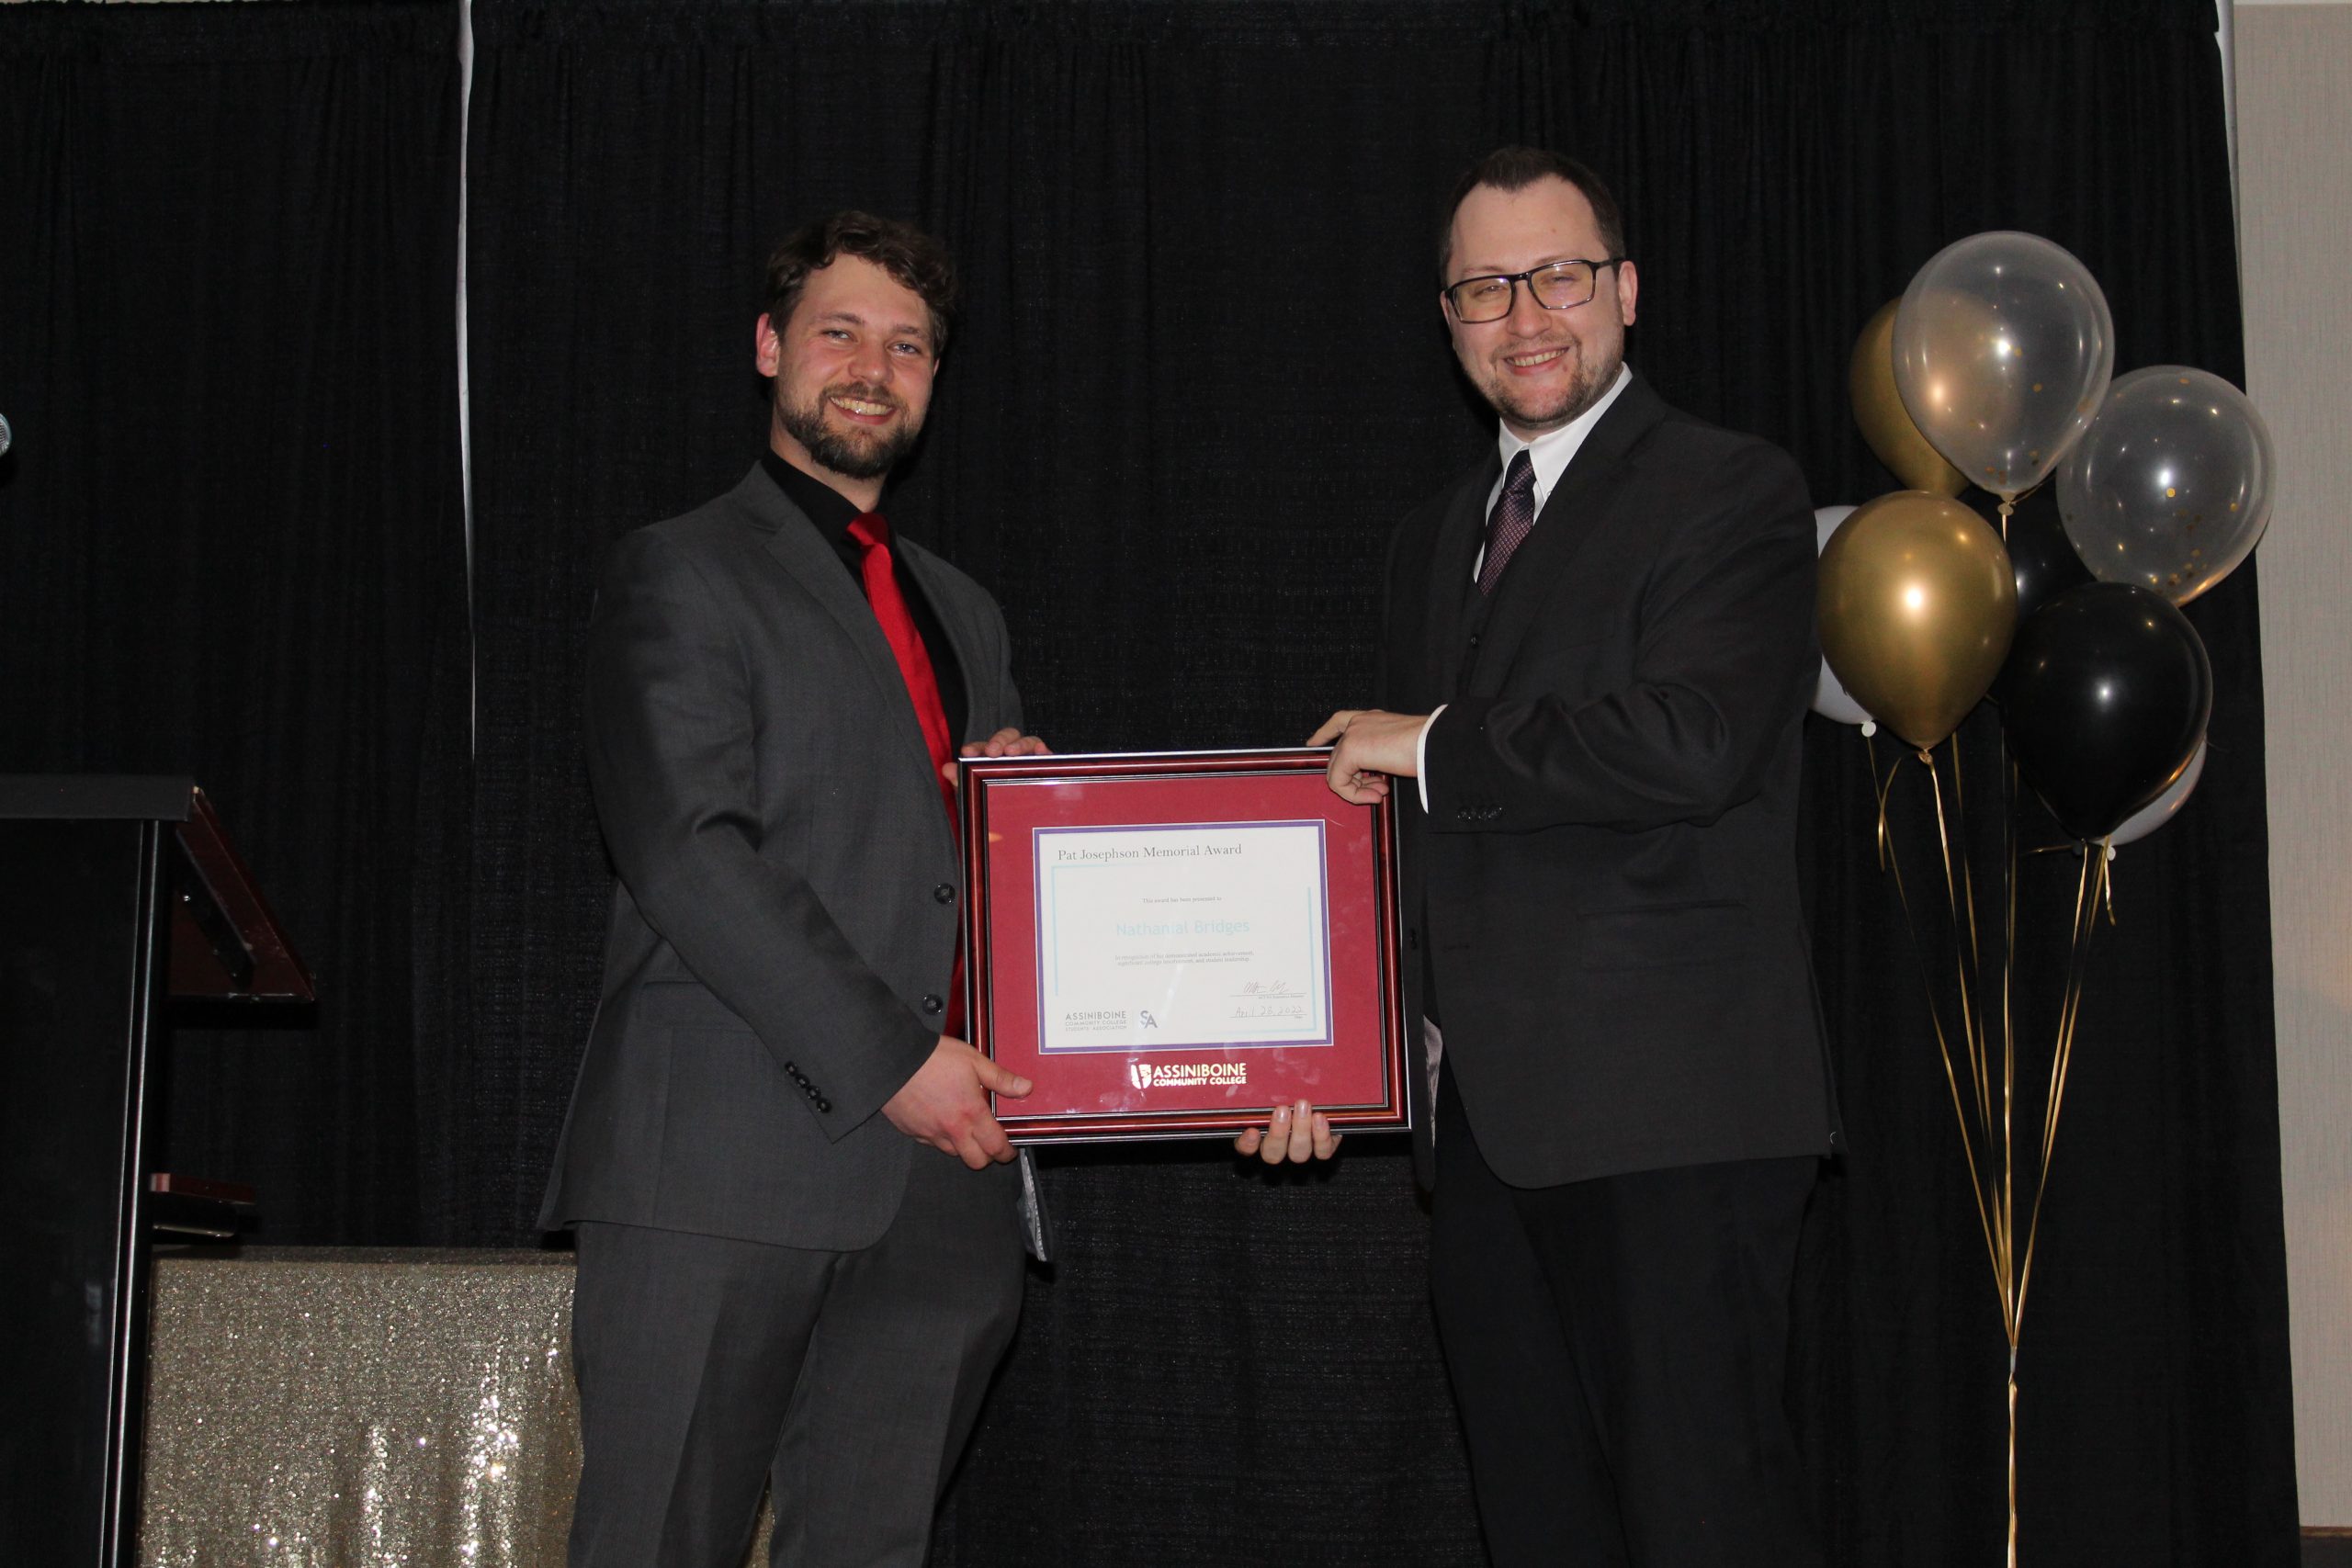 Nathanial Bridges receives the Pat Josephson Memorial Award, Presented by Matthew May, Executive Director ACCSA